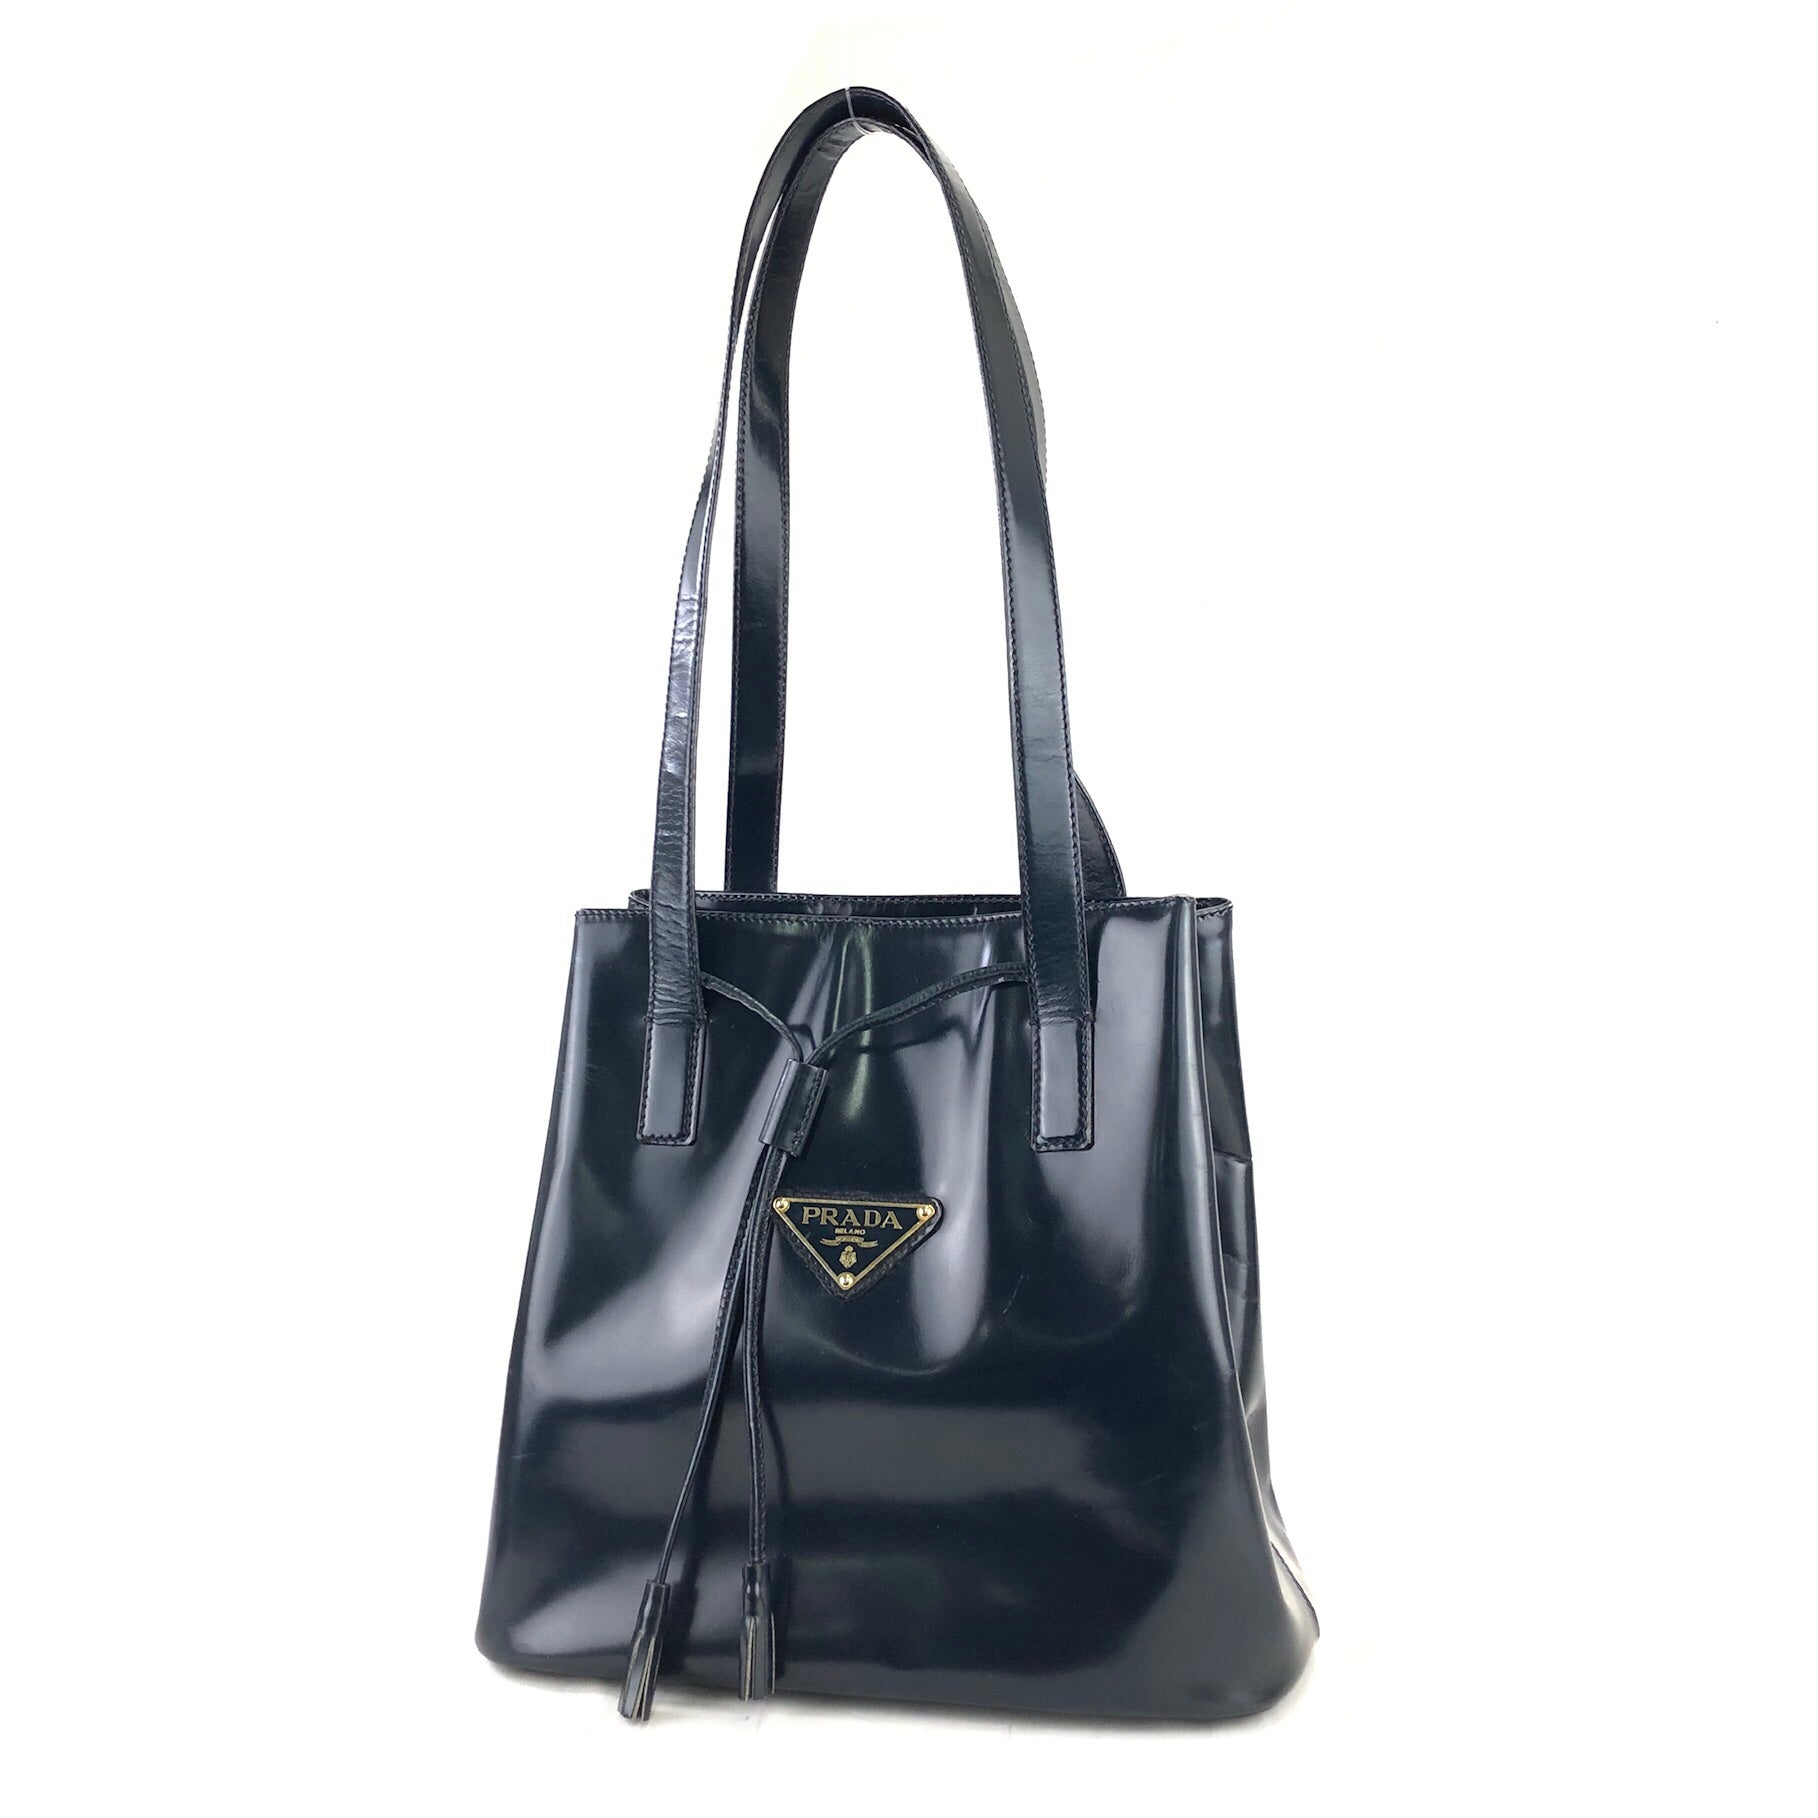 Auth PRADA Handbag Tote Shoulder Bag #1006 Black Leather